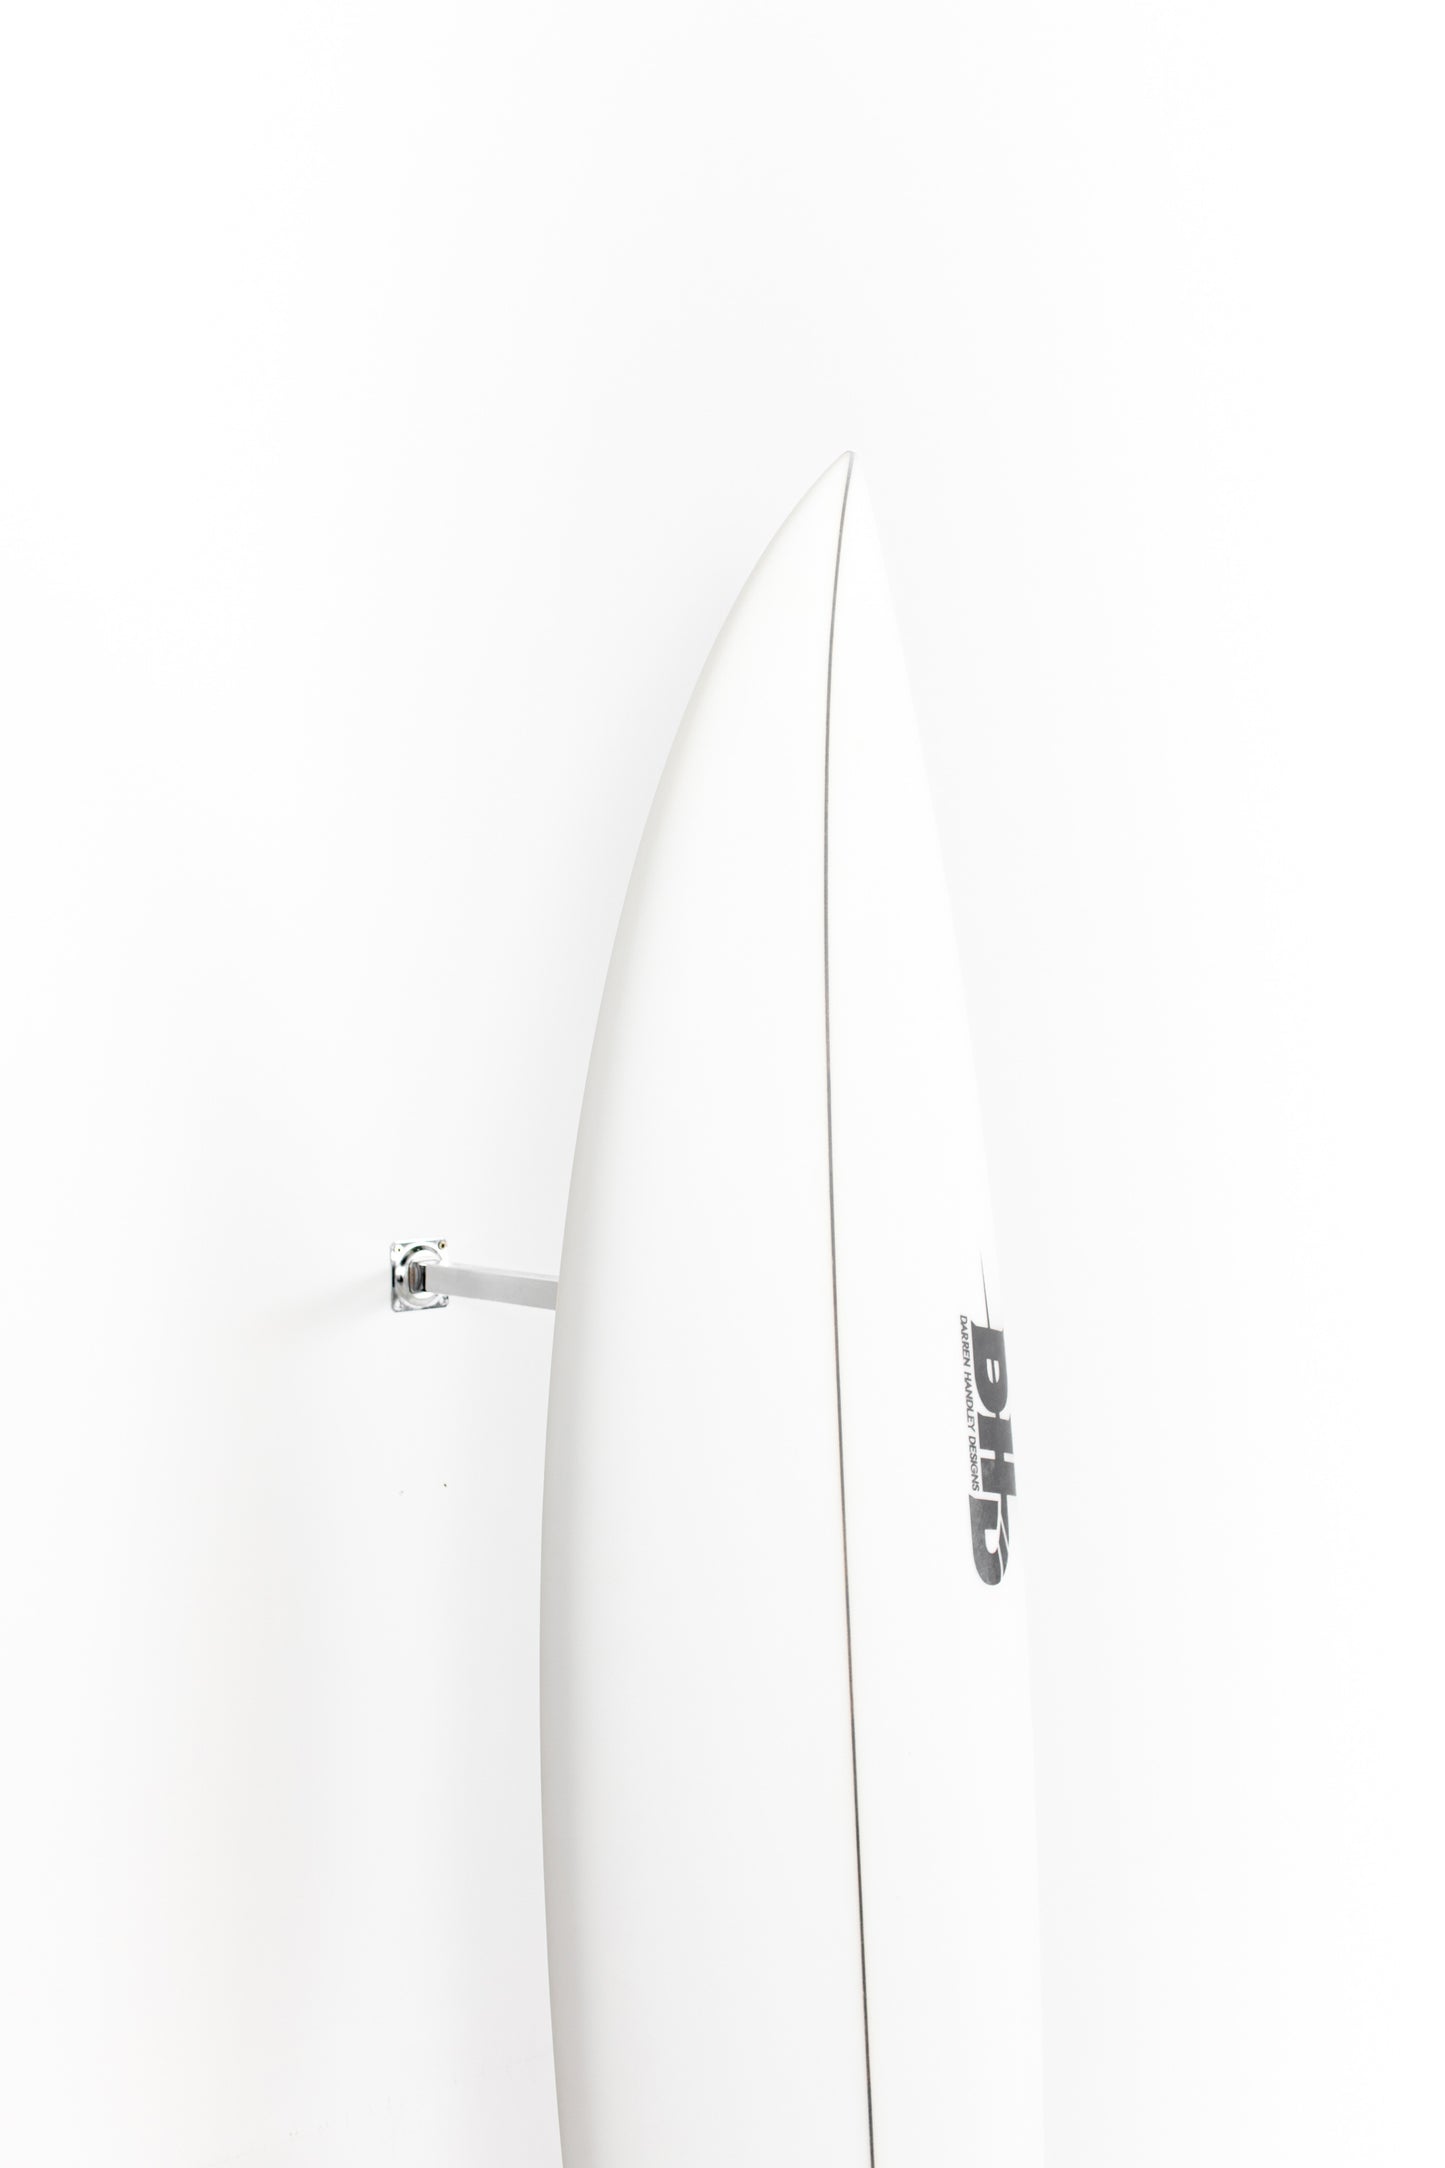 
                  
                    Pukas Surf Shop - DHD - DNA by Darren Handley - 6'3" x 19 3/8 x 2 7/16 x 32L - DHDDNA63
                  
                